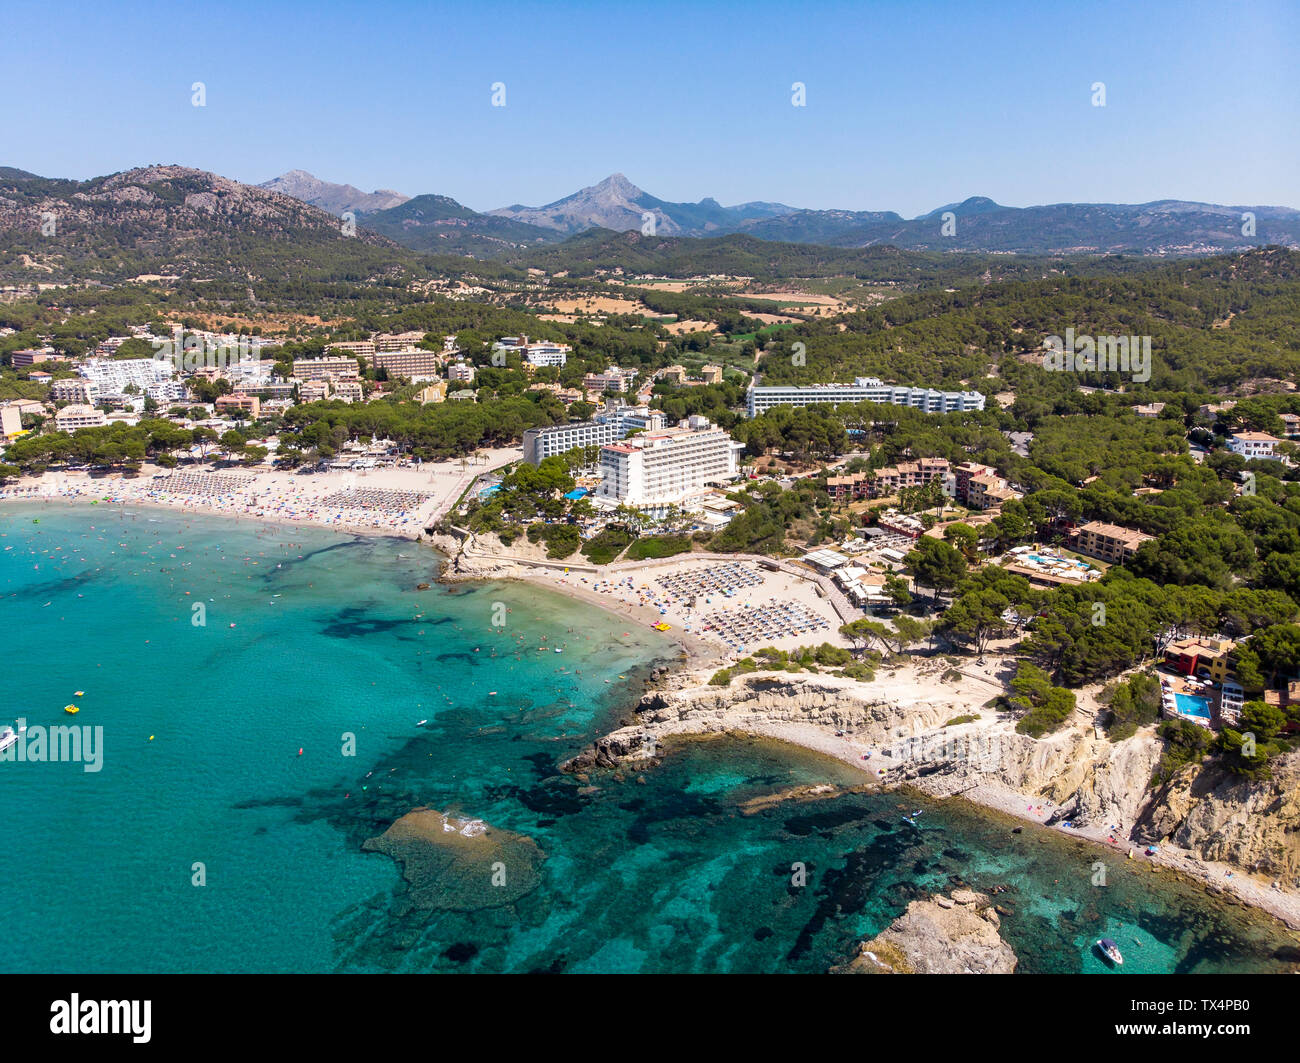 España, Mallorca, Costa de la Calma, vista aérea sobre Peguera, con hoteles y playas Foto de stock